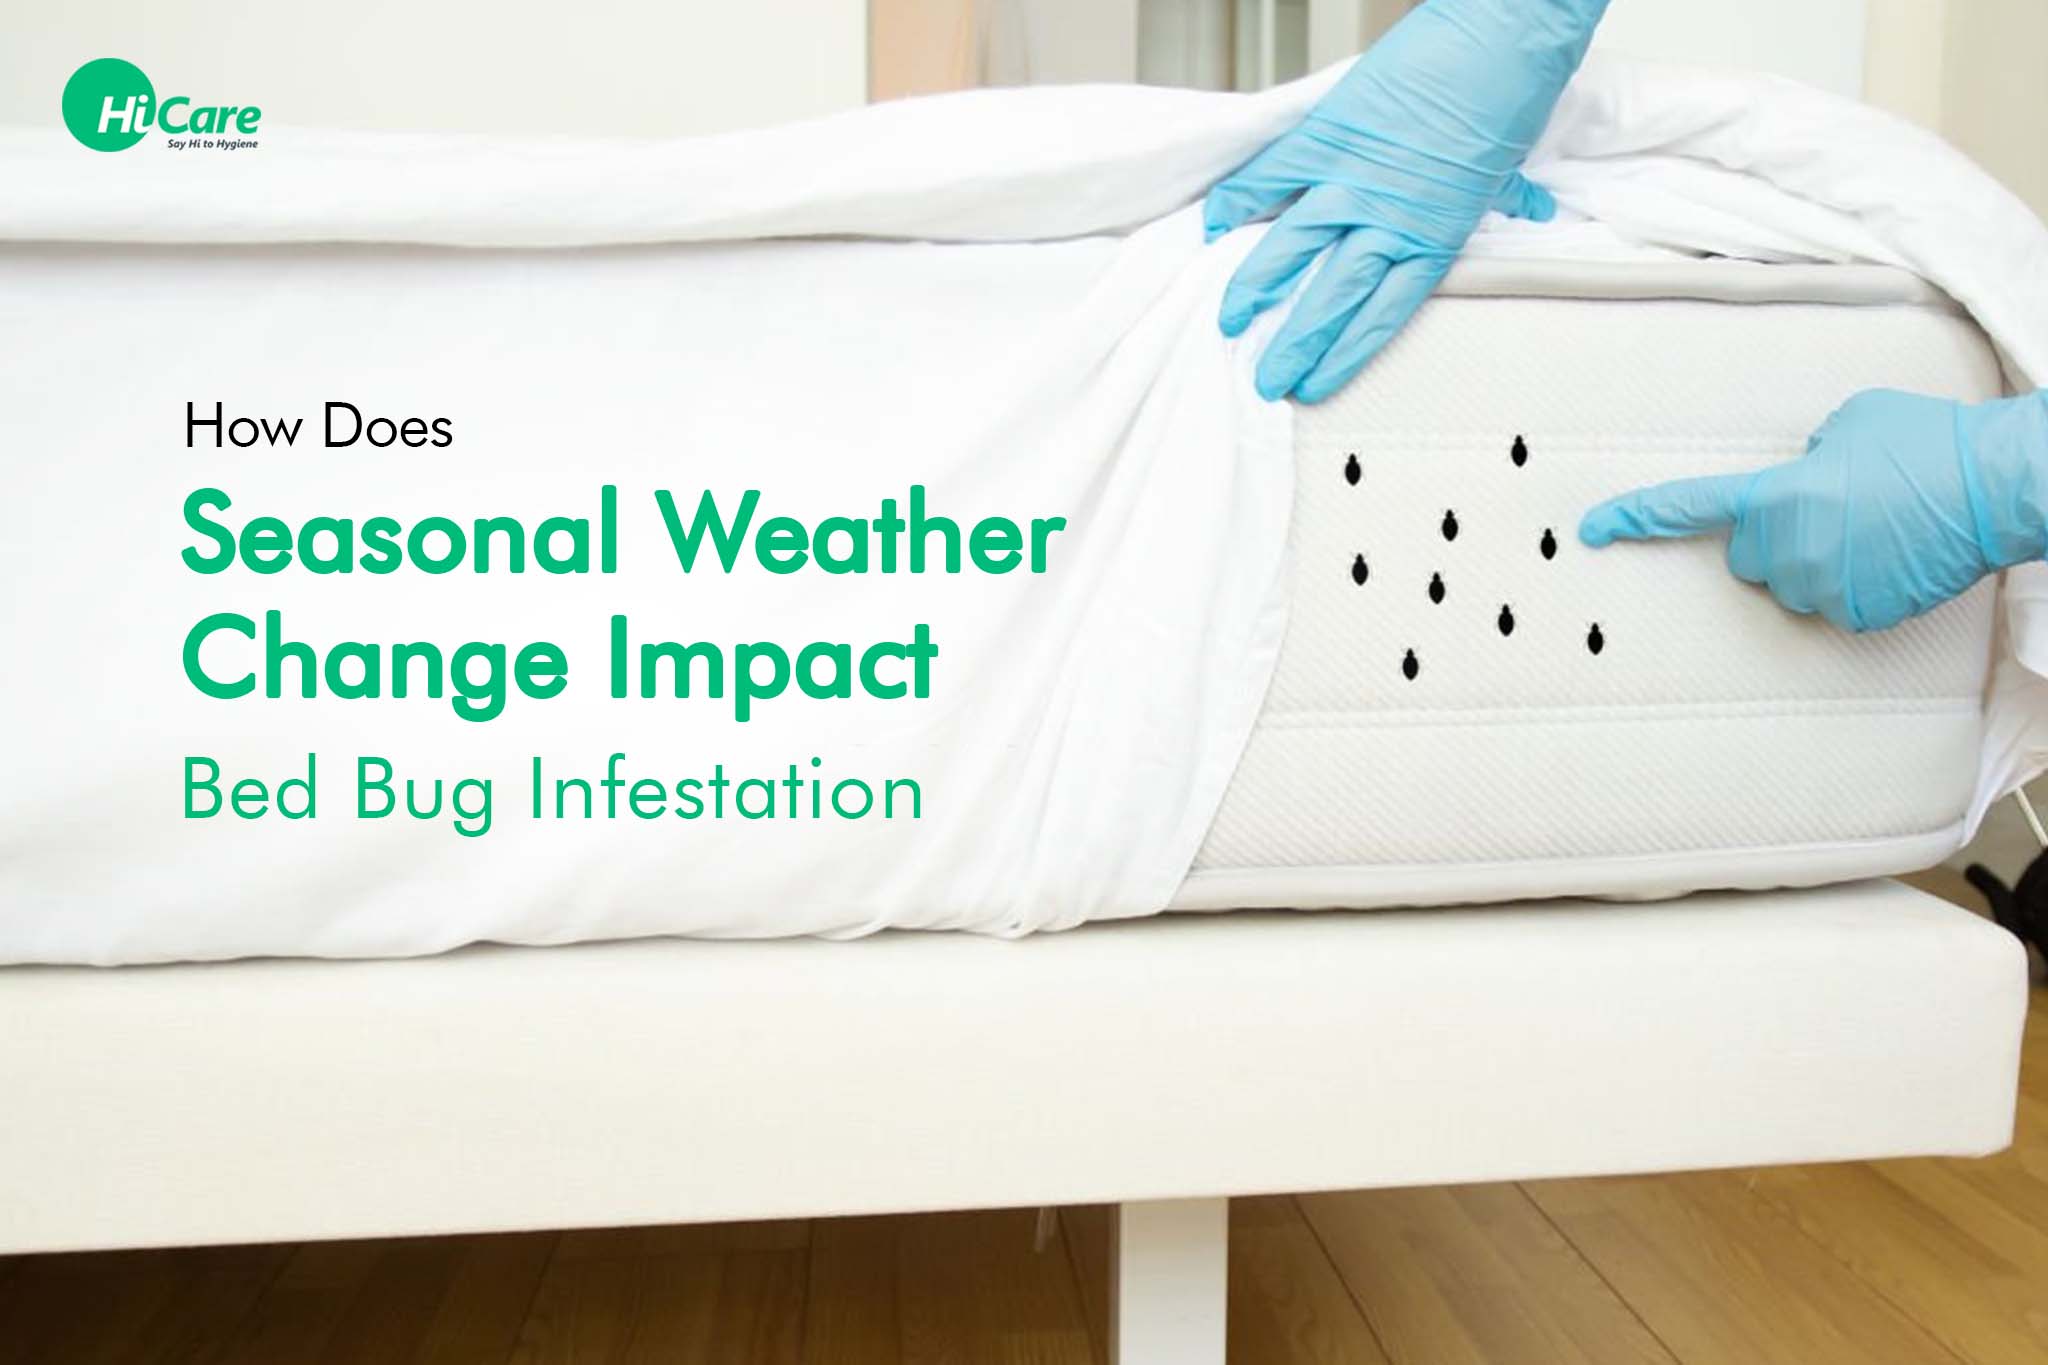 How Does Seasonal Weather Change Impact Bed Bug Infestation?